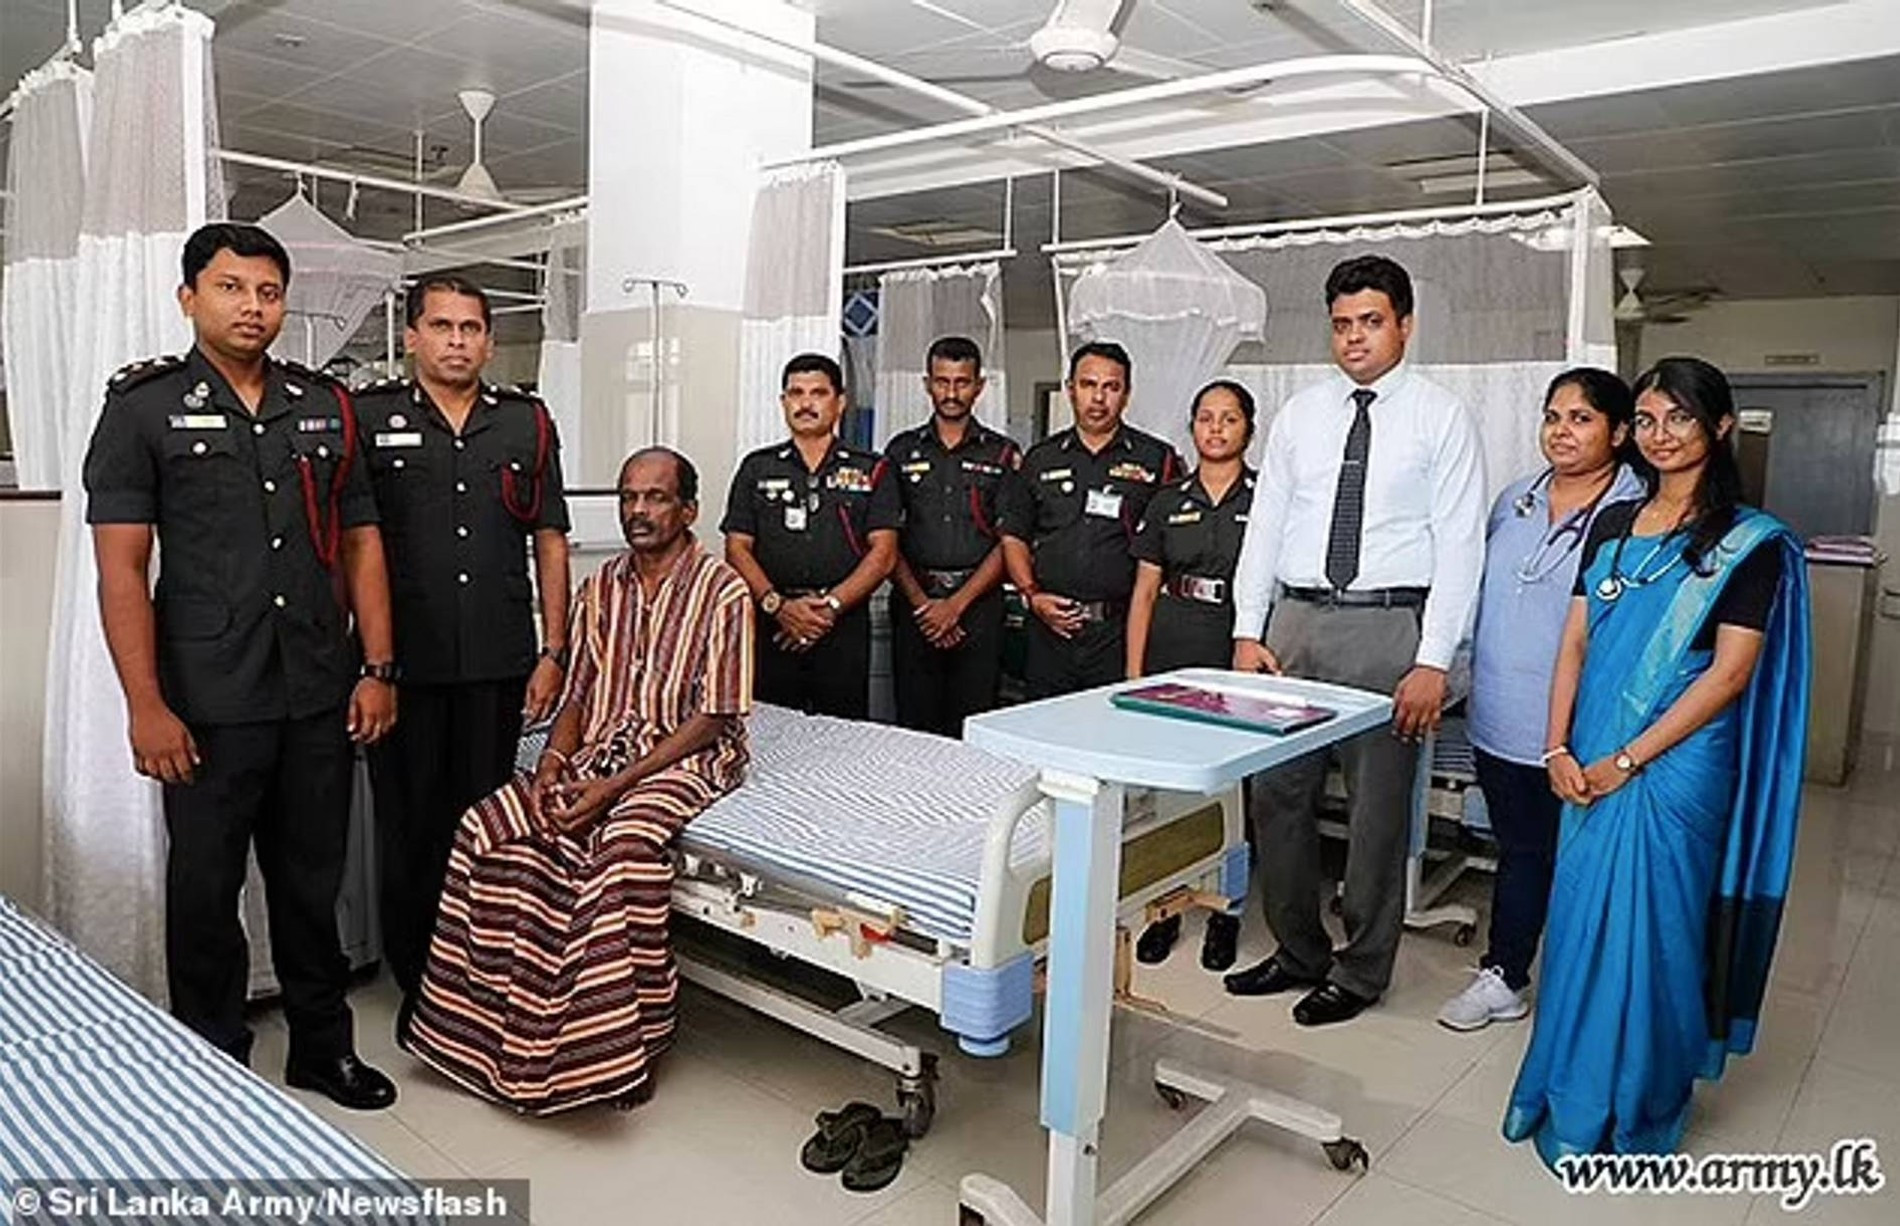 Канистас Кунге с врачами
Фото: Daily Mail